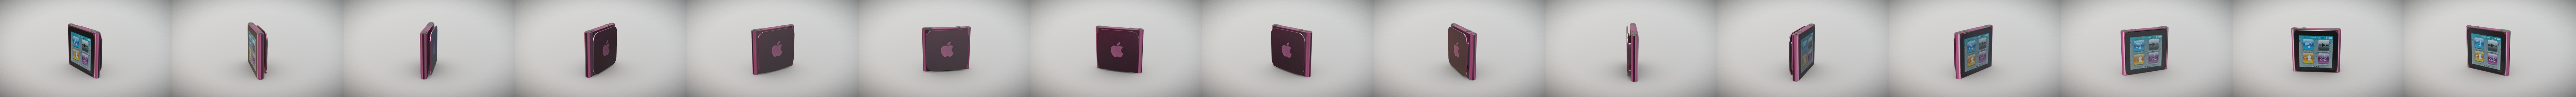 Apple iPod nano 6G 3D model